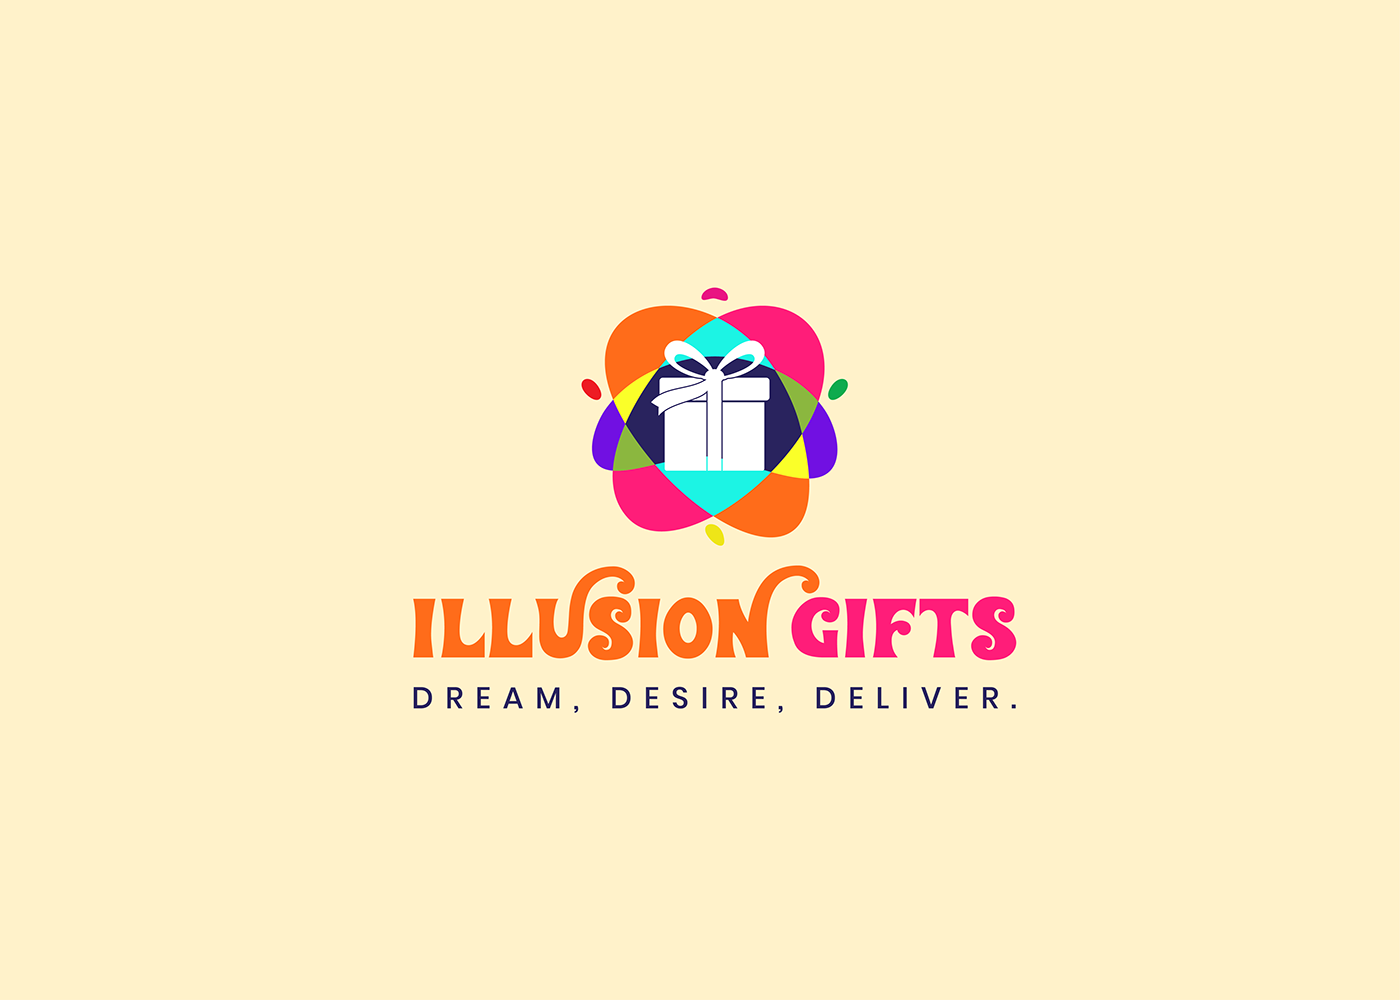 Creative Illusion Gifts brand identity #gifts #branding #logoidentity #brandguidance
#logodesign #ui